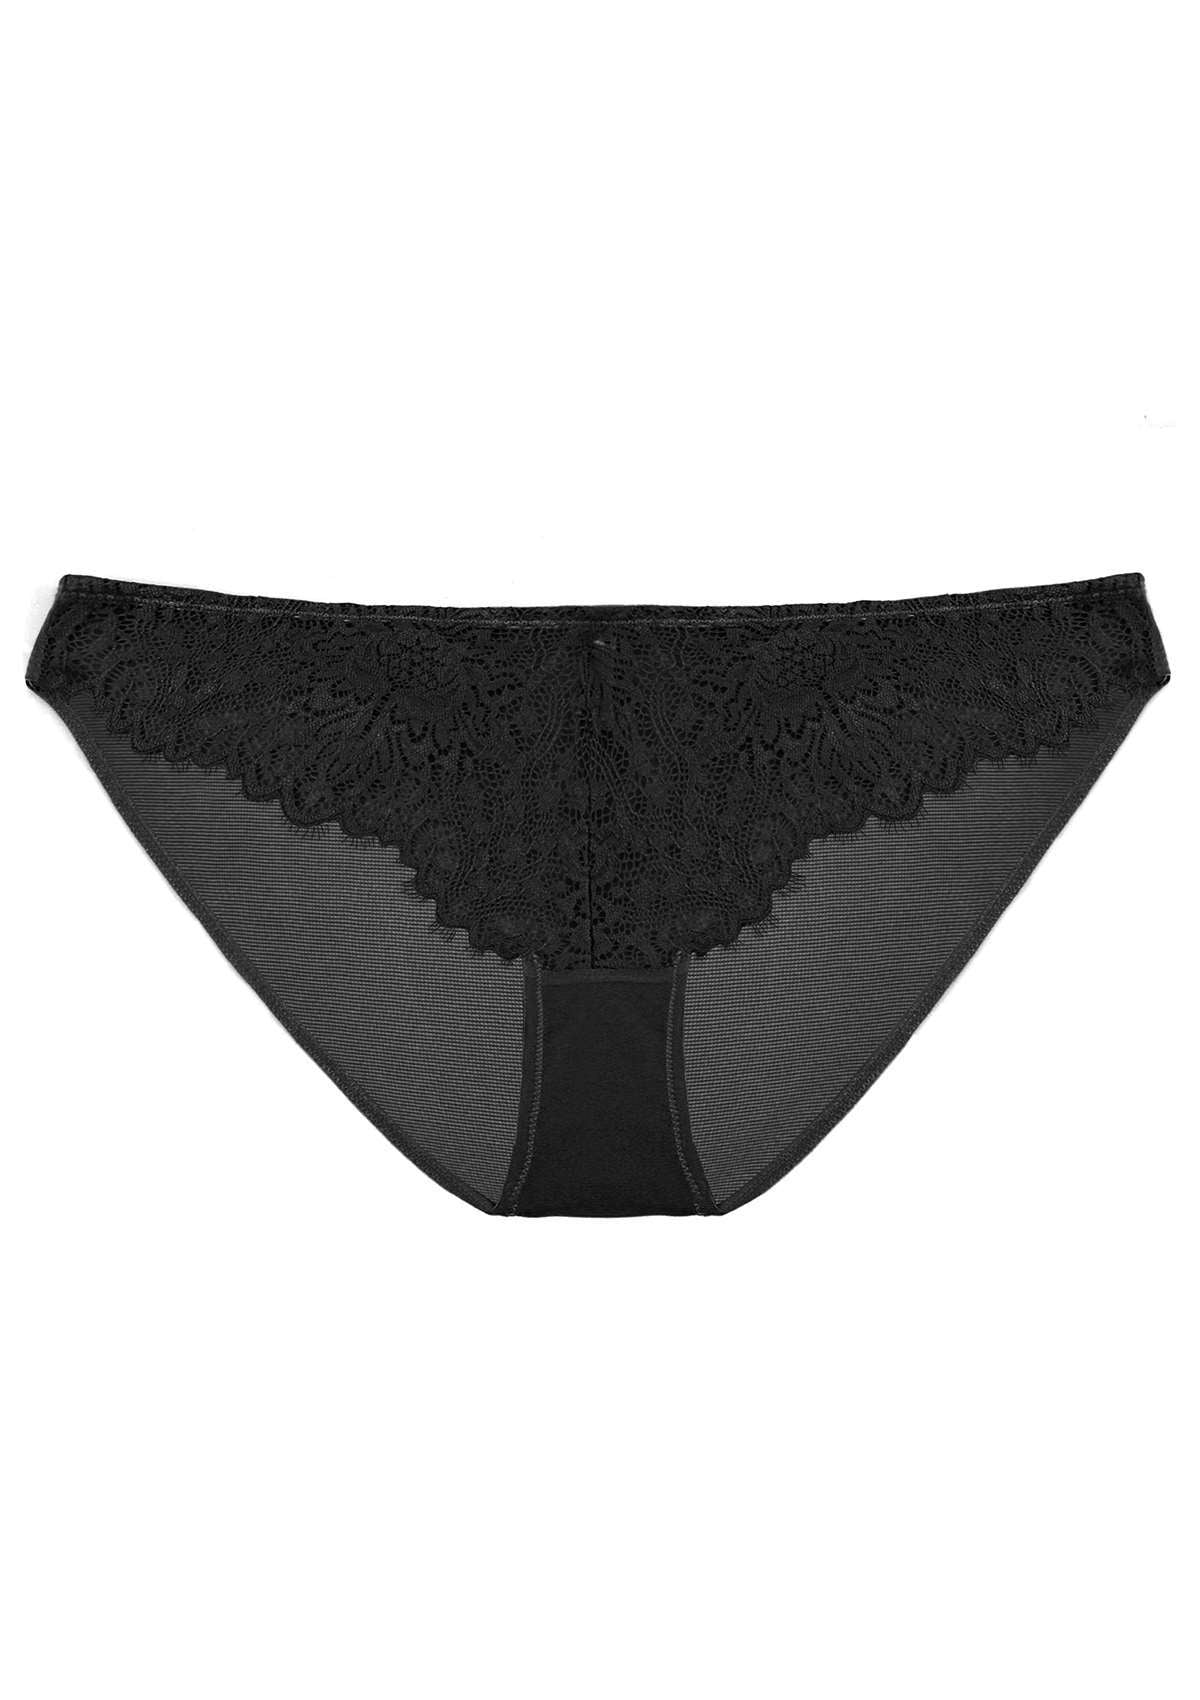 HSIA Sunflower Exquisite Black Bikini Lace Underwear - XXXL / Bikini / Black